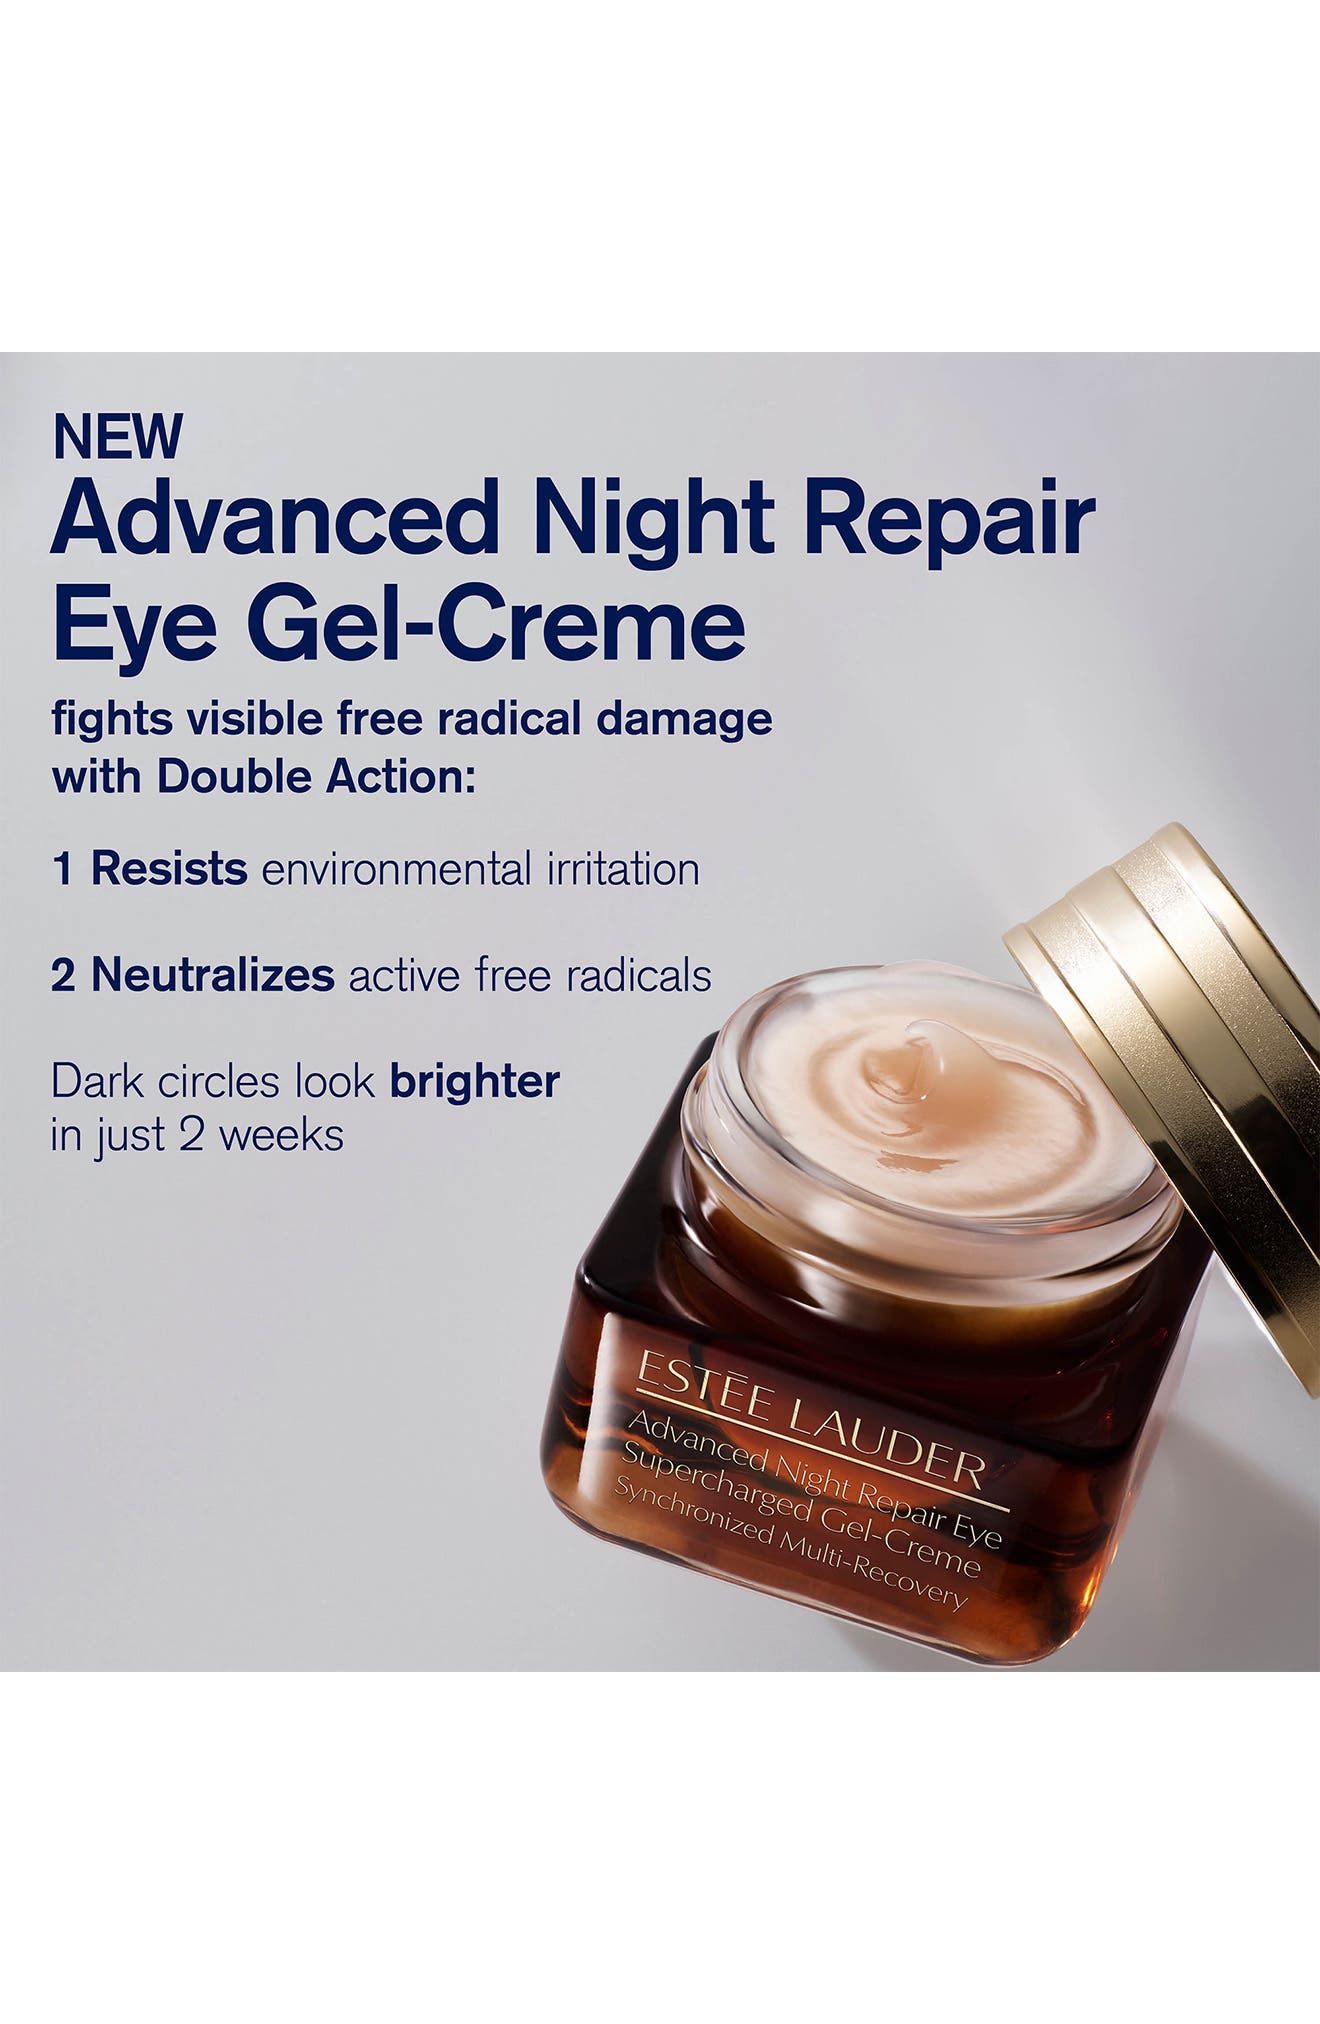 Estee Lauder Advanced Night Repair Eye Supercharged Gel-Creme Synchronized Multi-Recovery Eye Cream